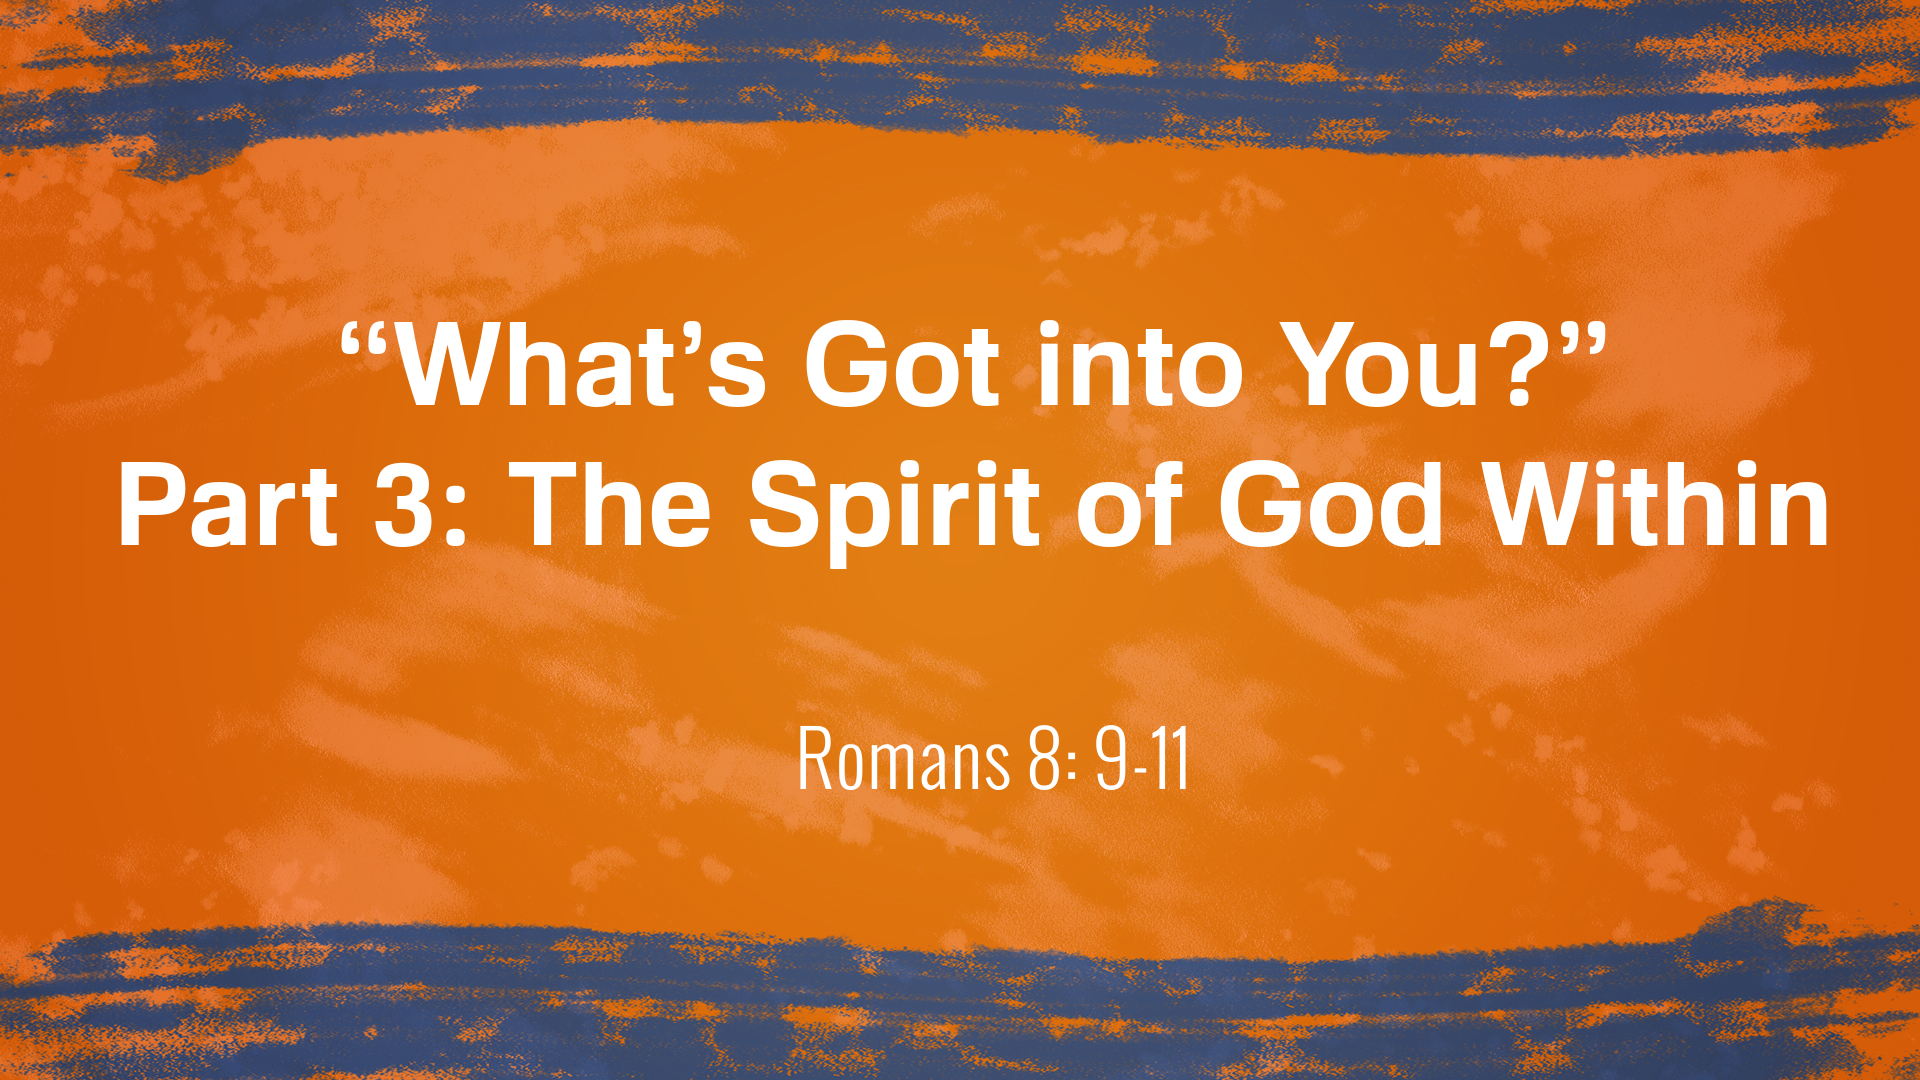 Jan 30, 2022 - Sermon Video Title: "What's Got into You?" Part 3: The Spirit of God Within Romans 8: 9-11 Speaker:  Elder Rob James